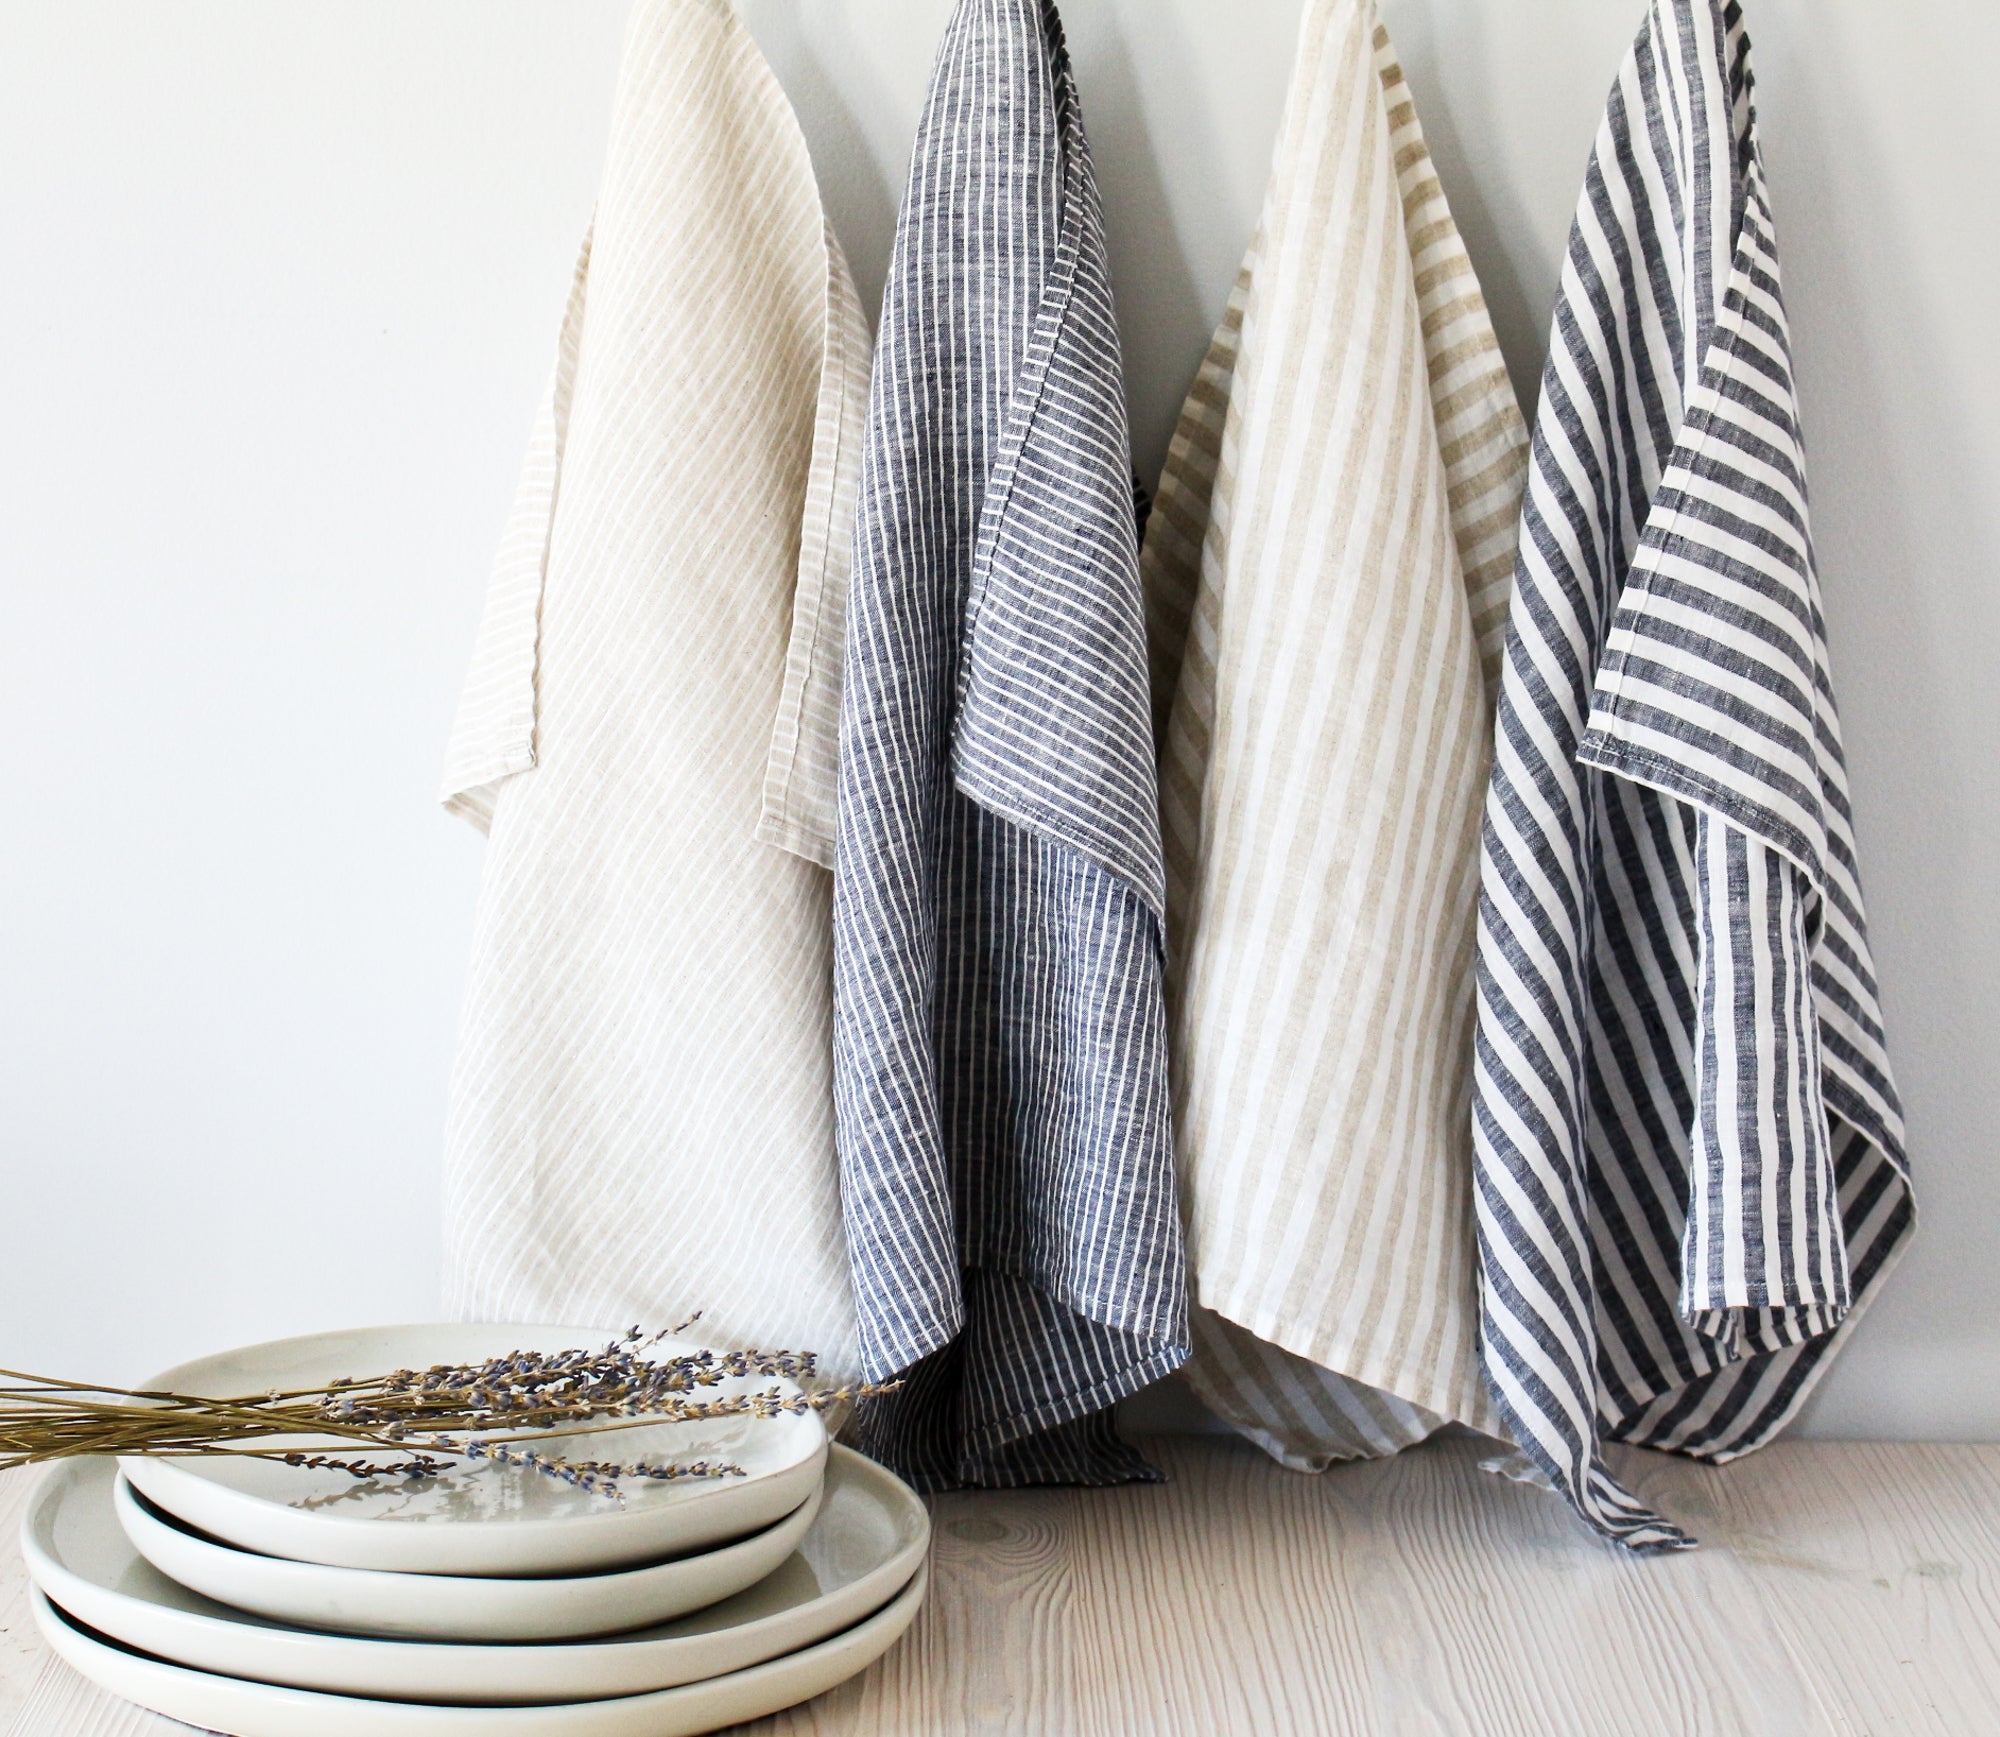 Sky Blue Striped Tea Towels Set of 3 or Single, Cotton & Linen Kitchen  Towels